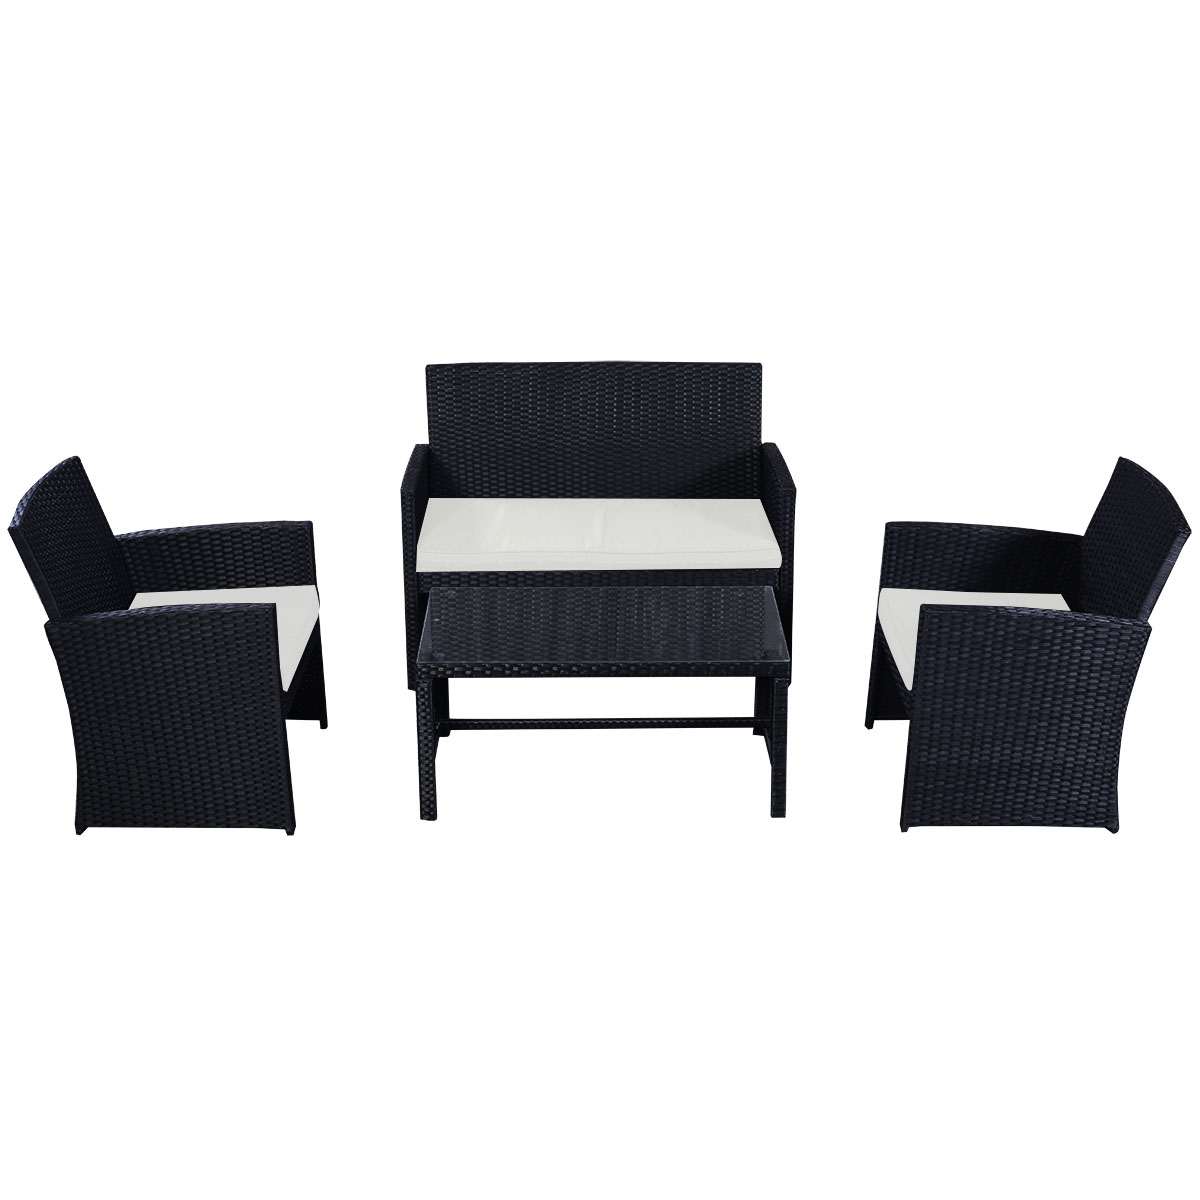 CB16574 Outdoor Wicker Rattan Patio Furniture Set, Black - 4 Piece - image 2 of 6